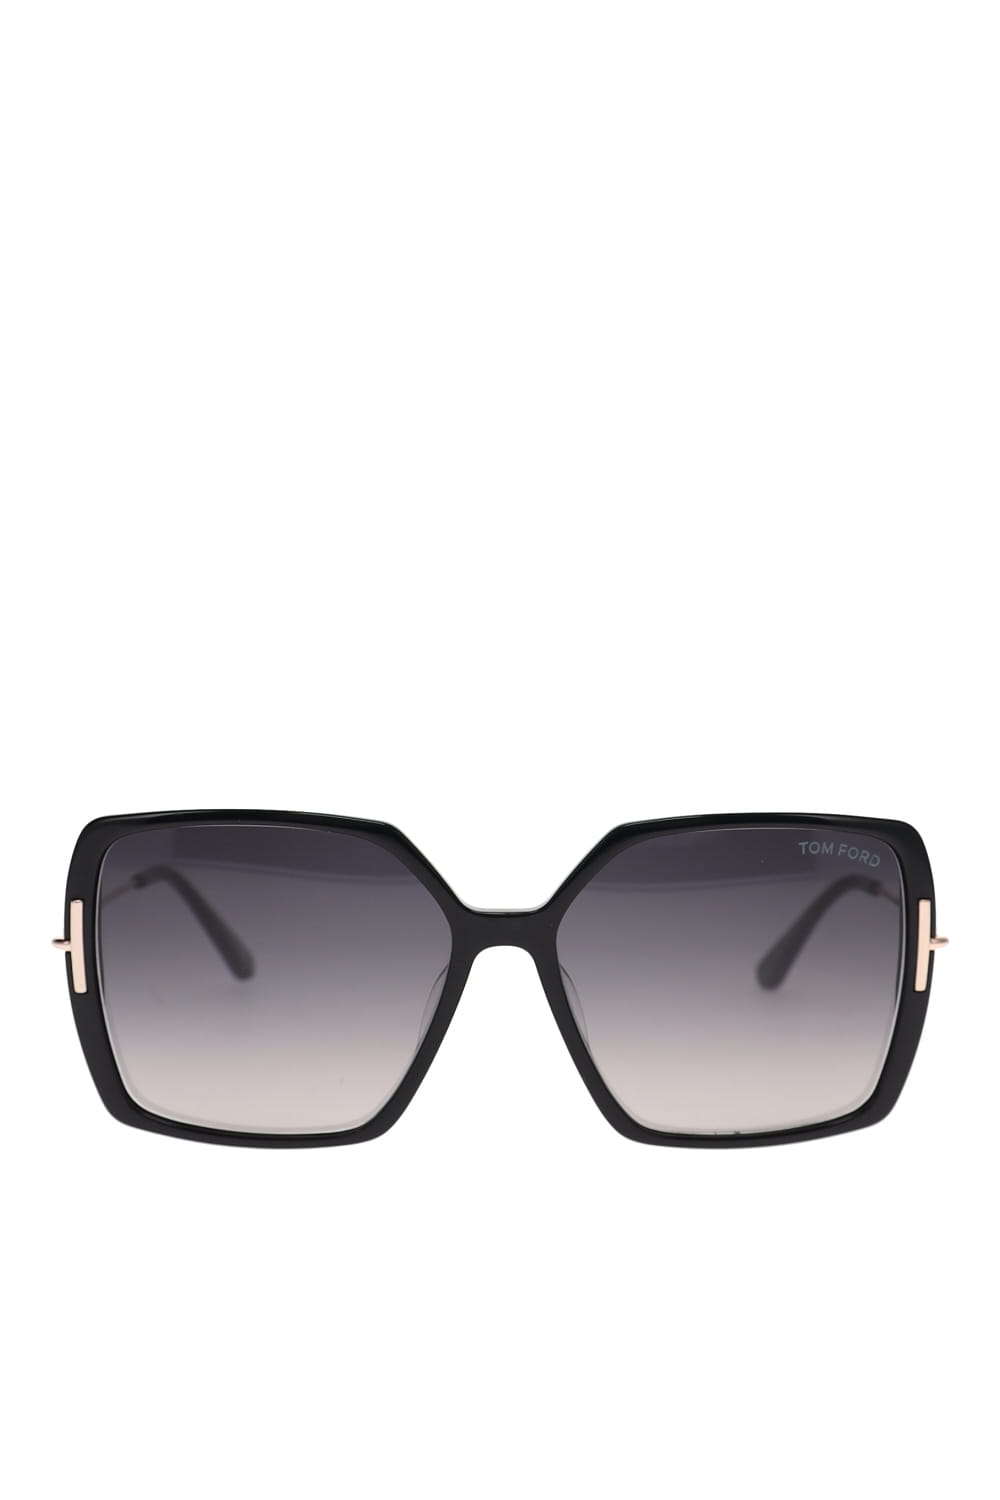 Tom Ford Eyewear FT1039 Shiny Black Rose Gold Sunglasses FT1039 Black/Smoke